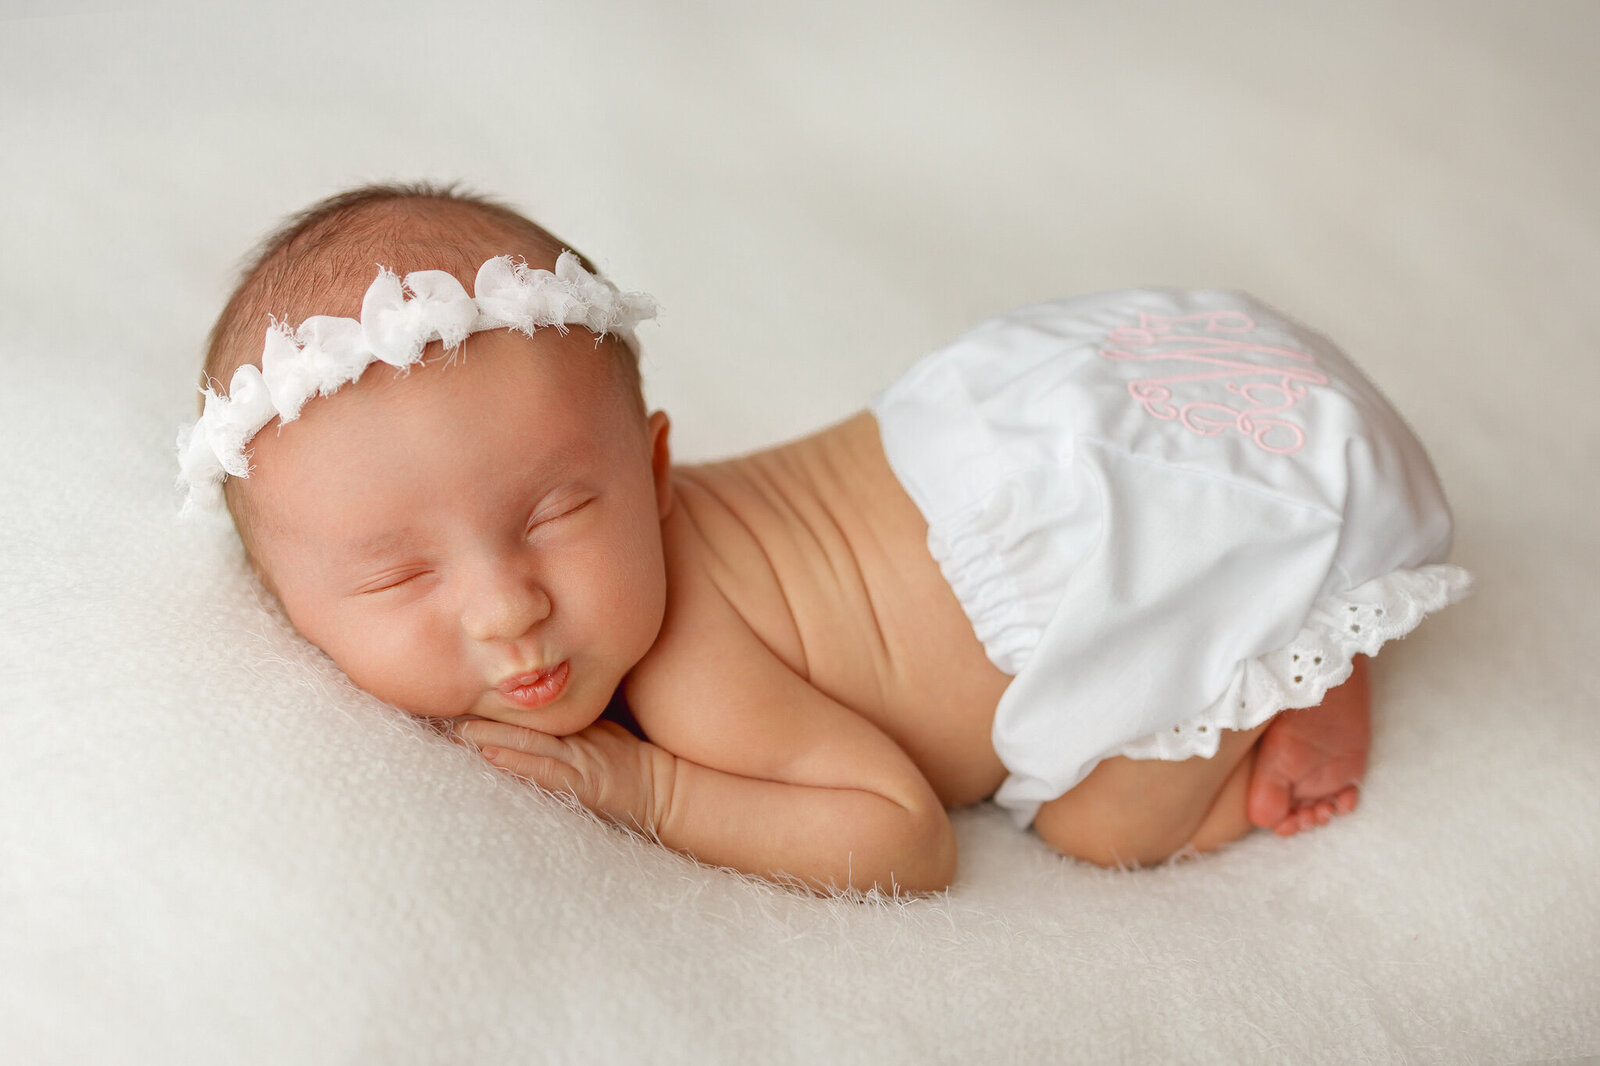 Newborn baby girl wearing heirloom monogramed bloomers posed on white fabric